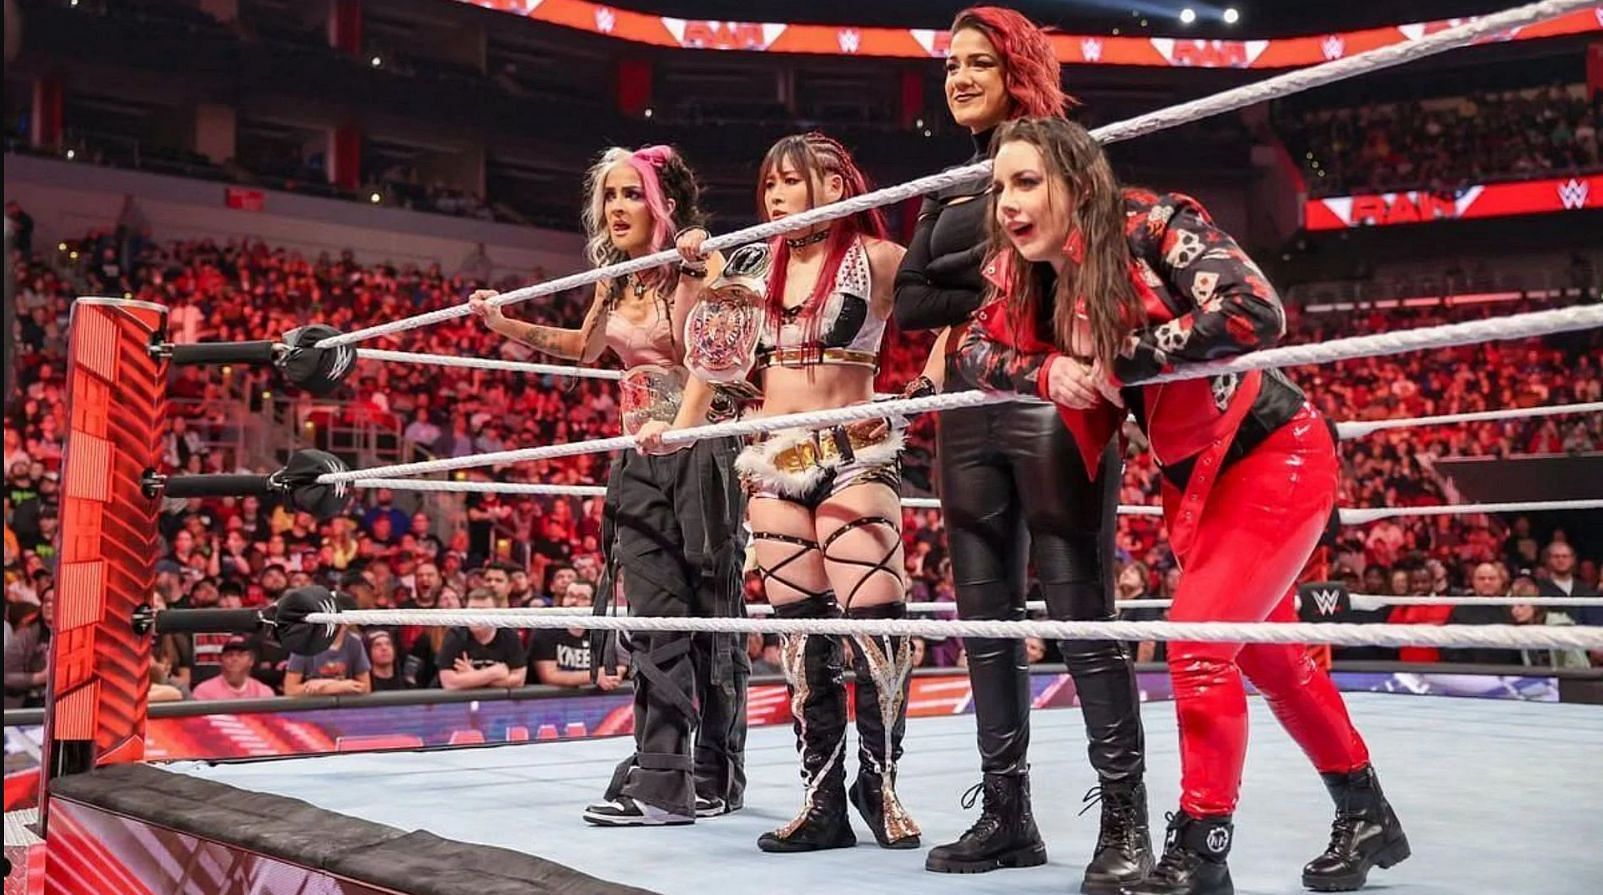 Nikki Cross has recently aligned herself with Damage CTRL on WWE RAW